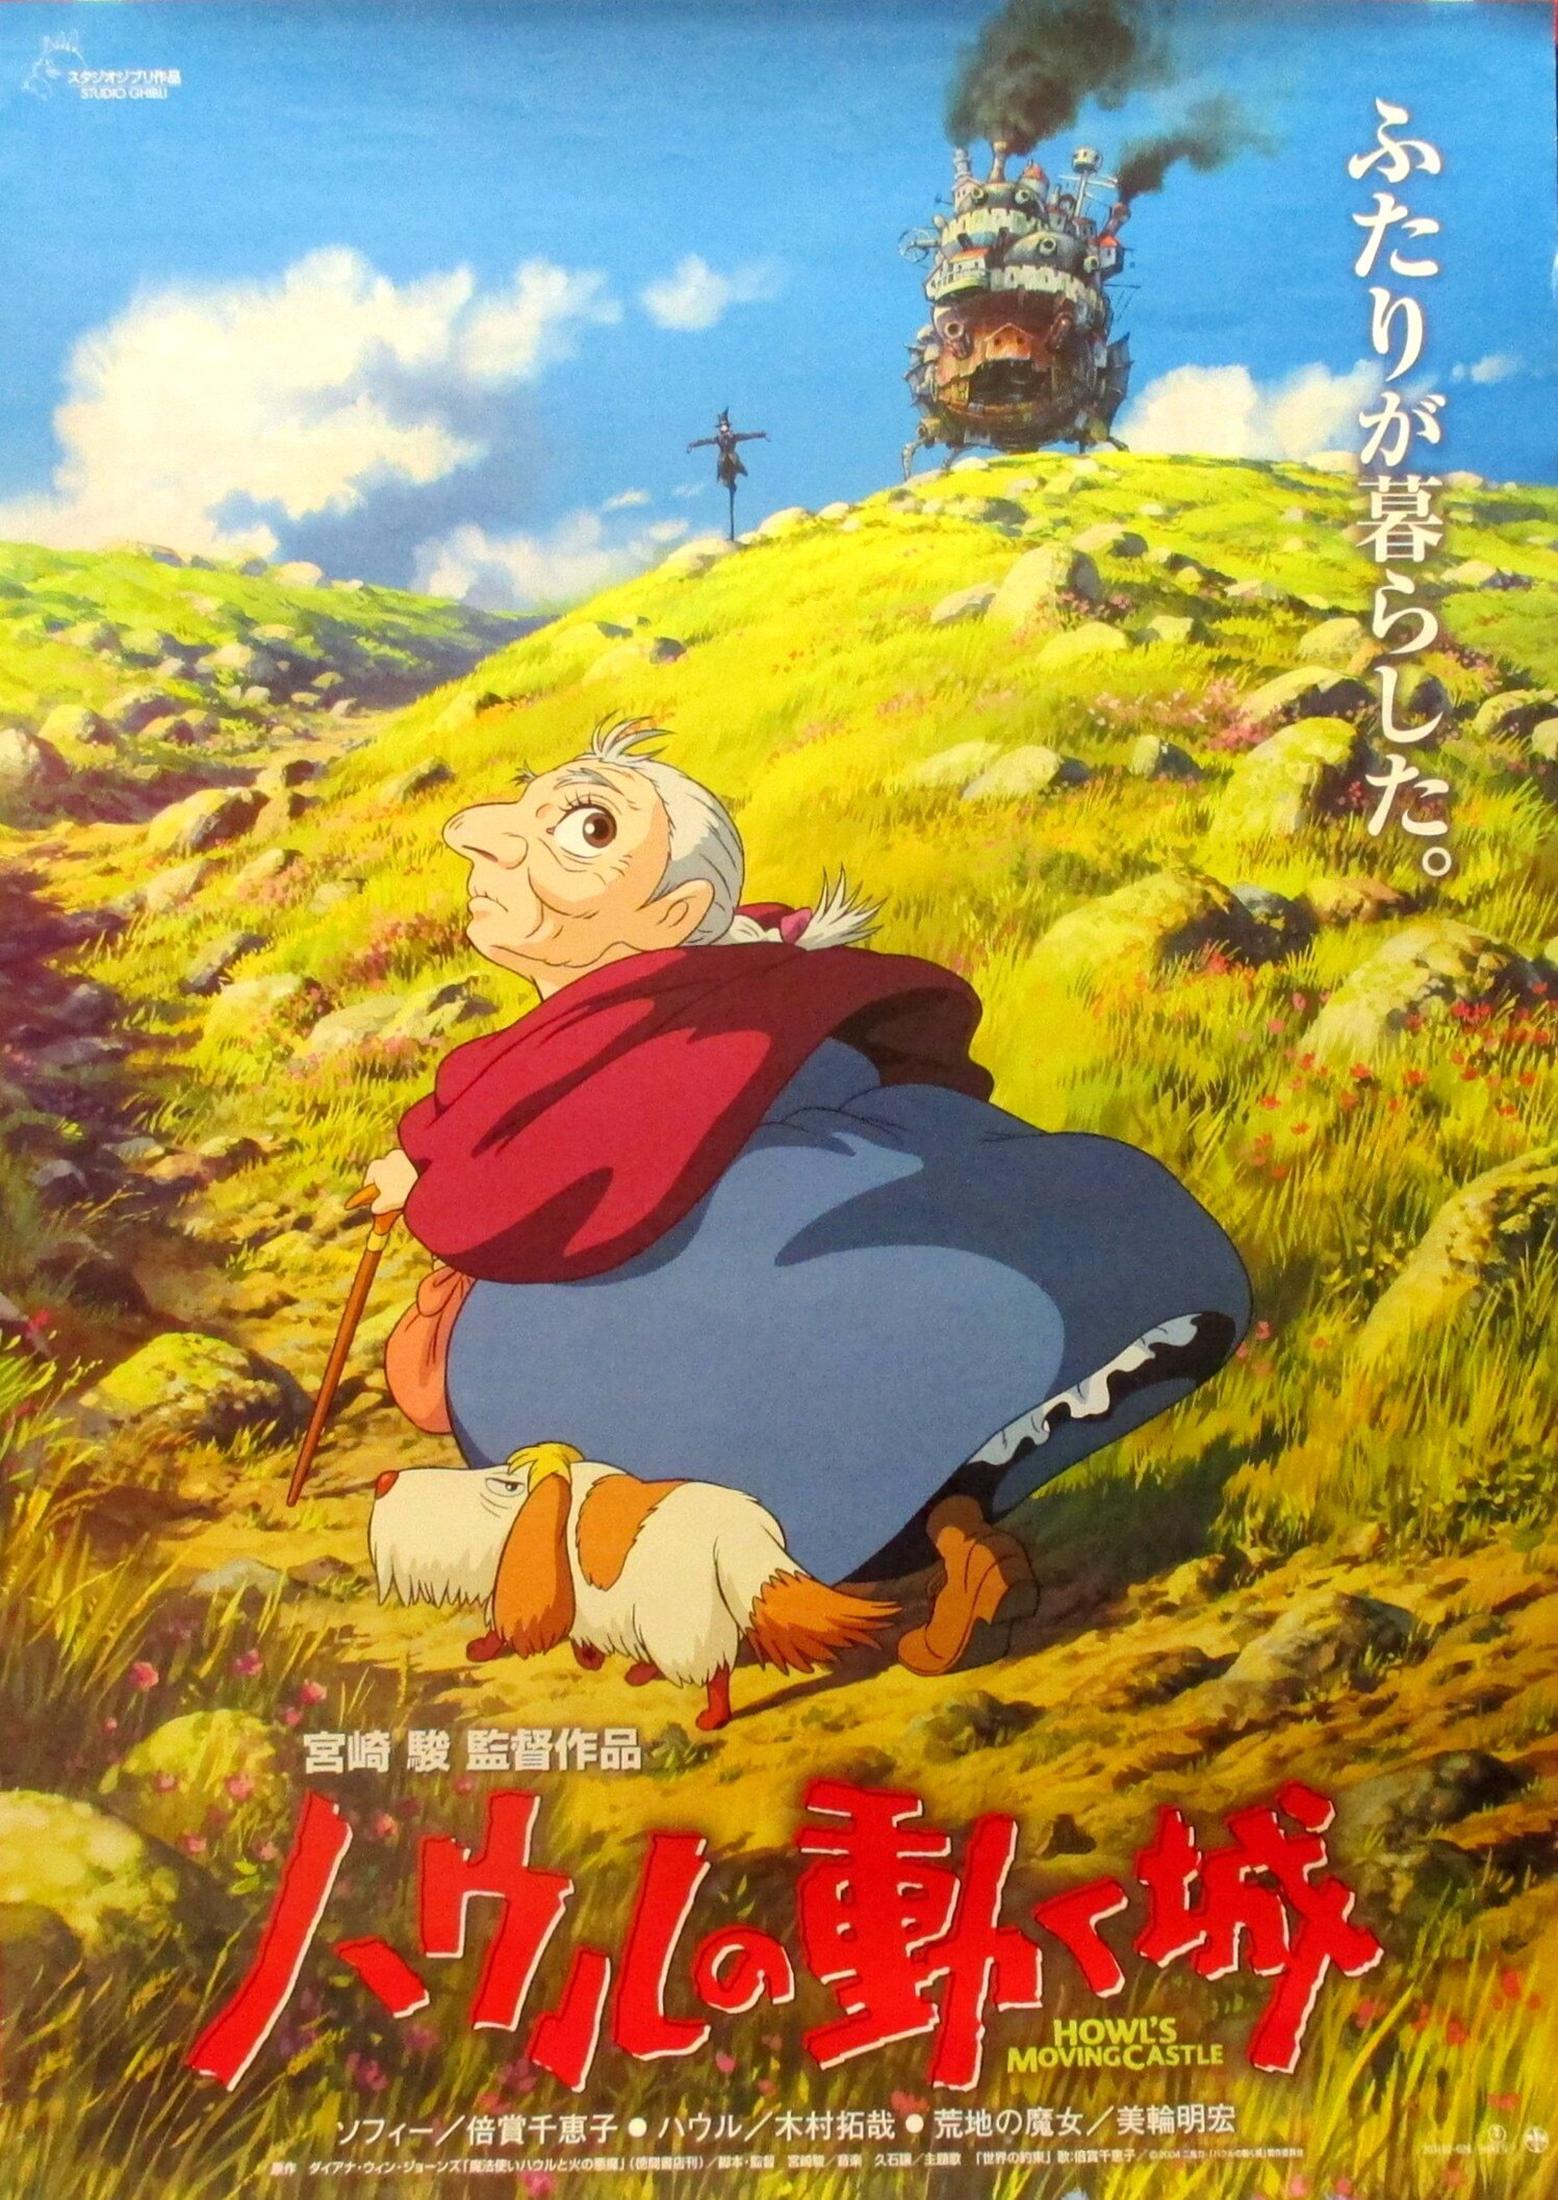 Unknown Print - Howl's Moving Castle Original Vintage Poster, Hayao Miyazaki, Studio Ghibli